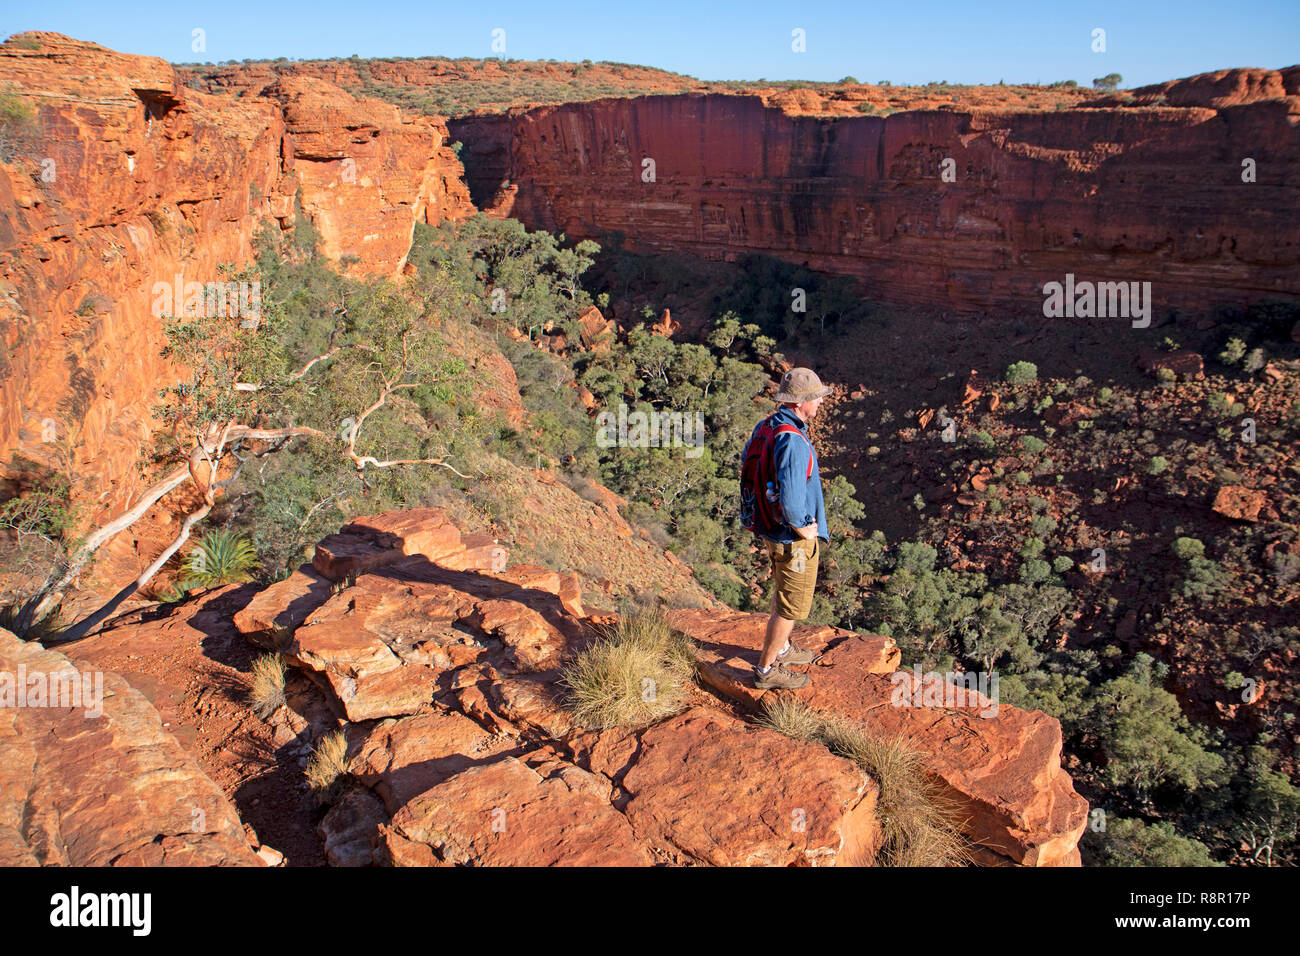 Watarrka National Park, Northern Territory, Australien, 20.10.2018: Mann am Rand des Kings Canyon Rim, hinunter in den Canyon suchen Stockfoto